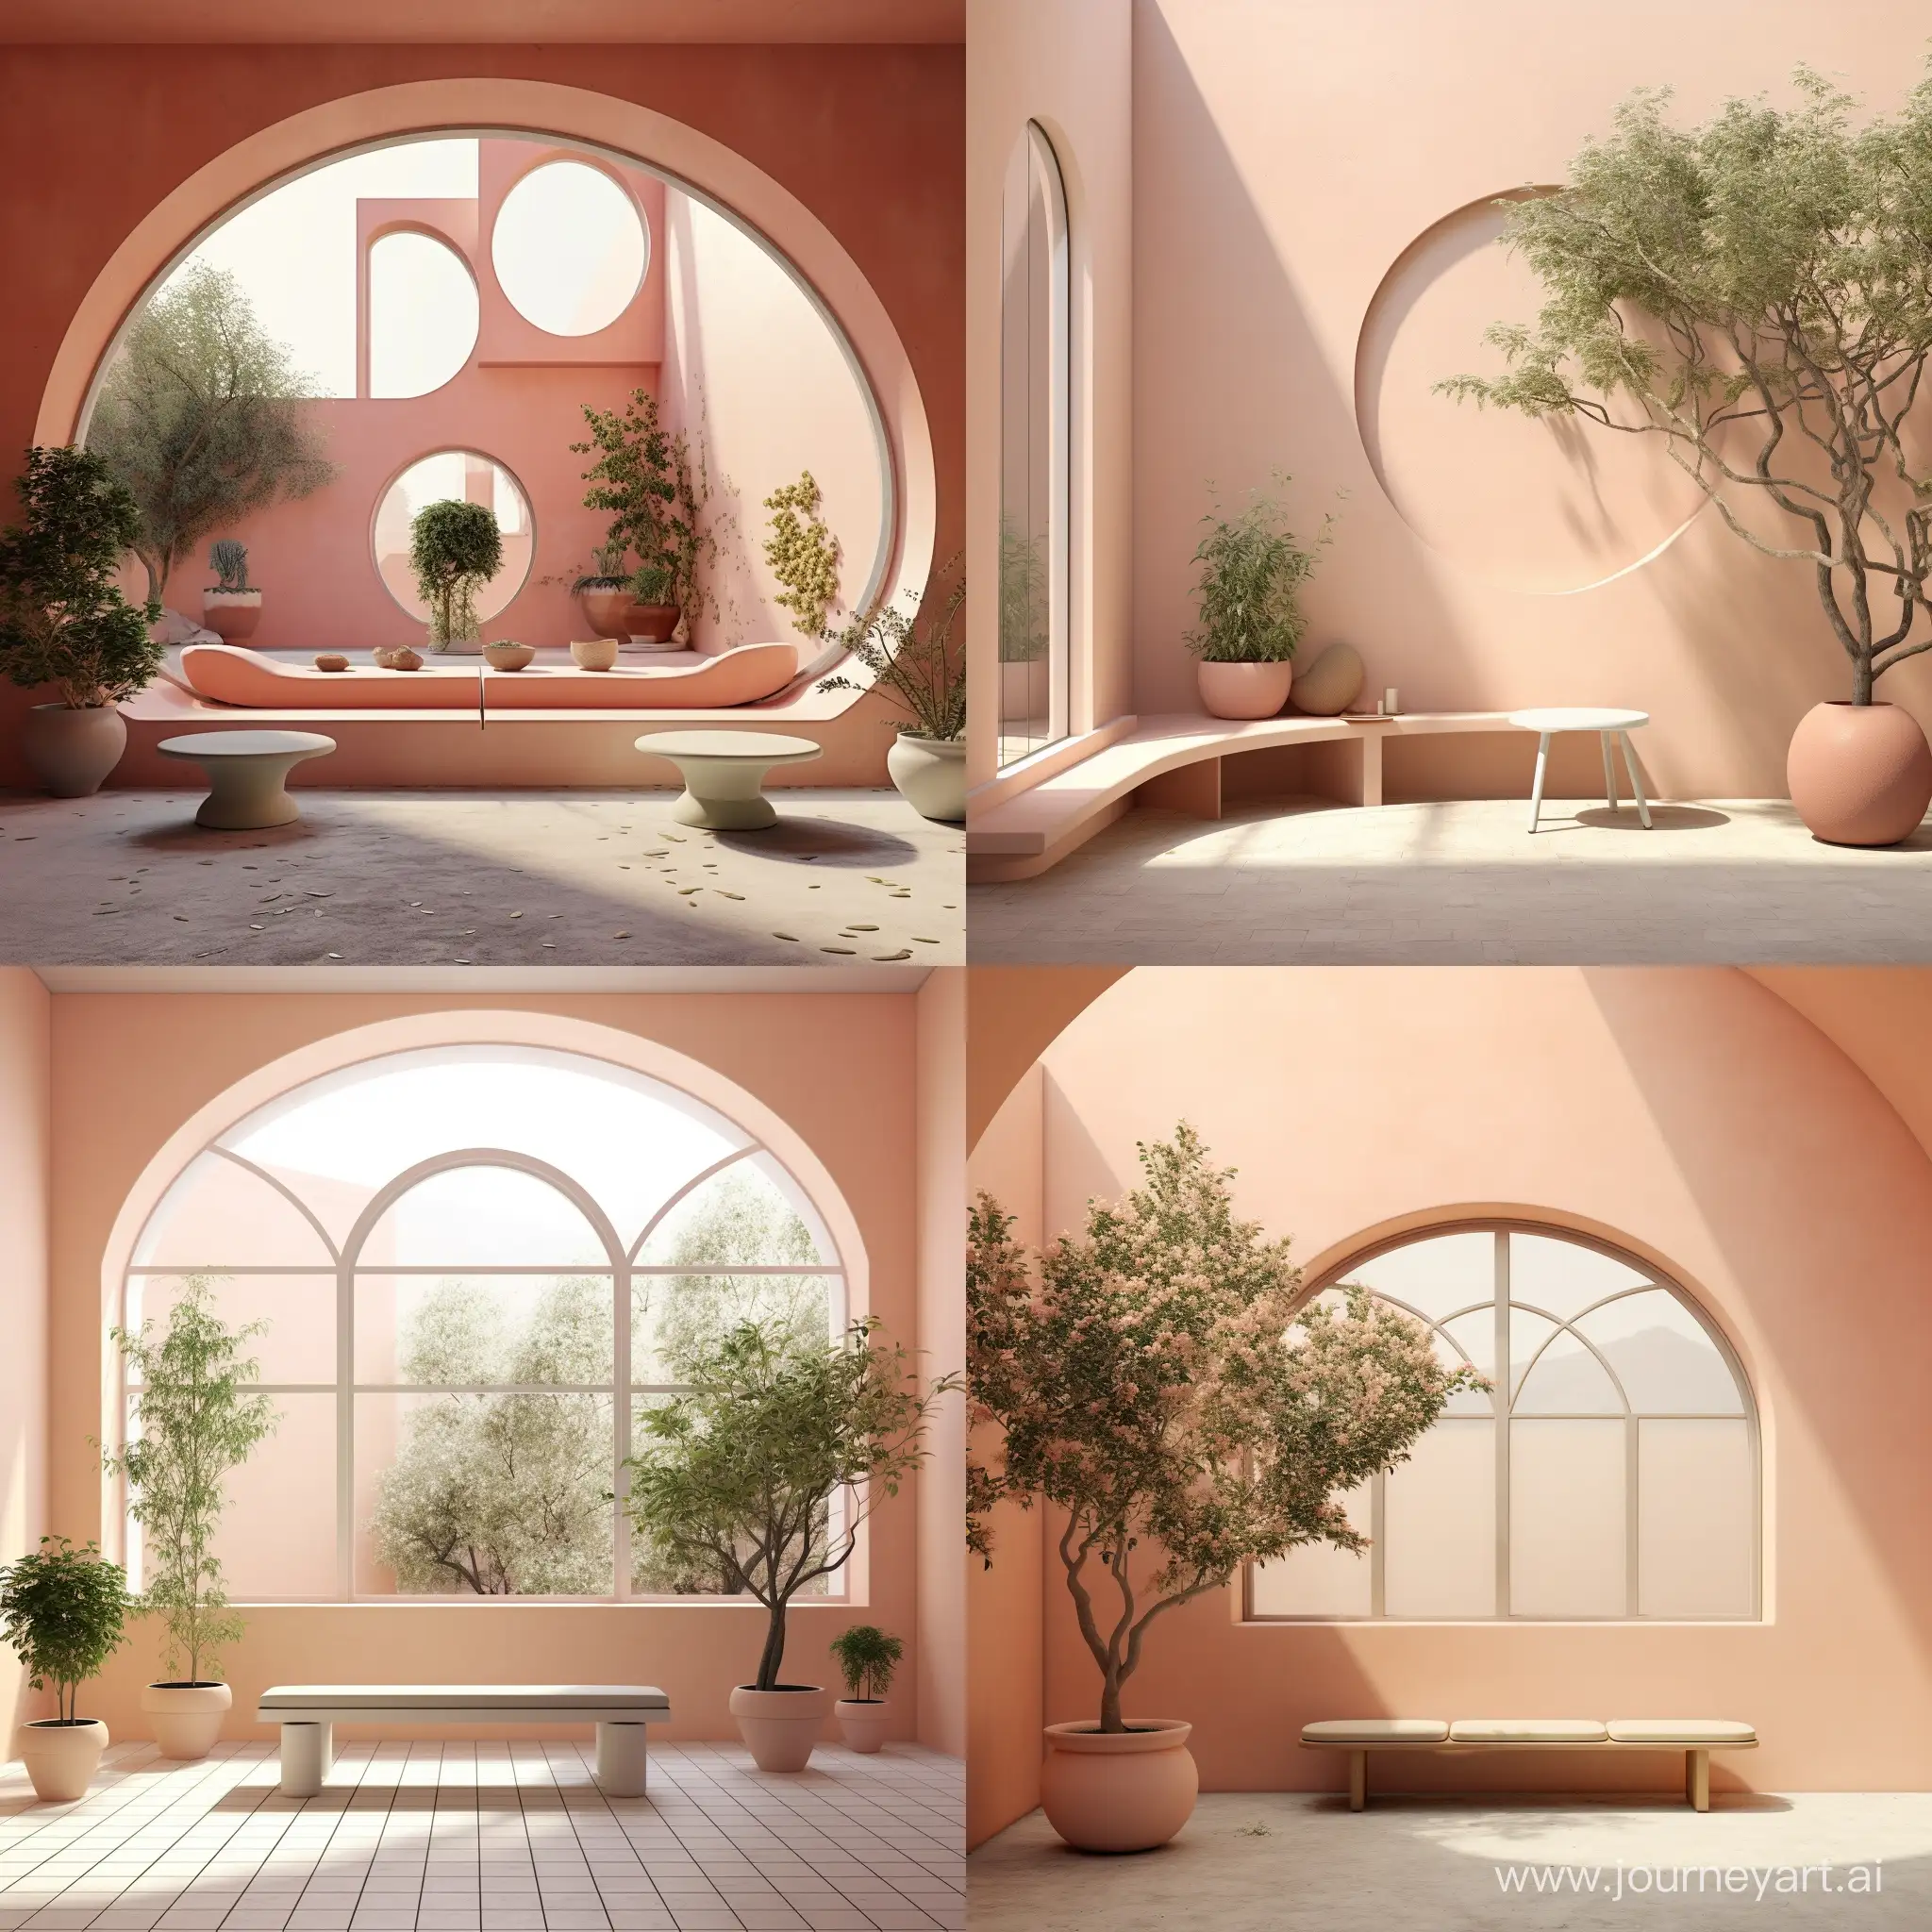 Urban-Oasis-PeachColored-Window-Garden